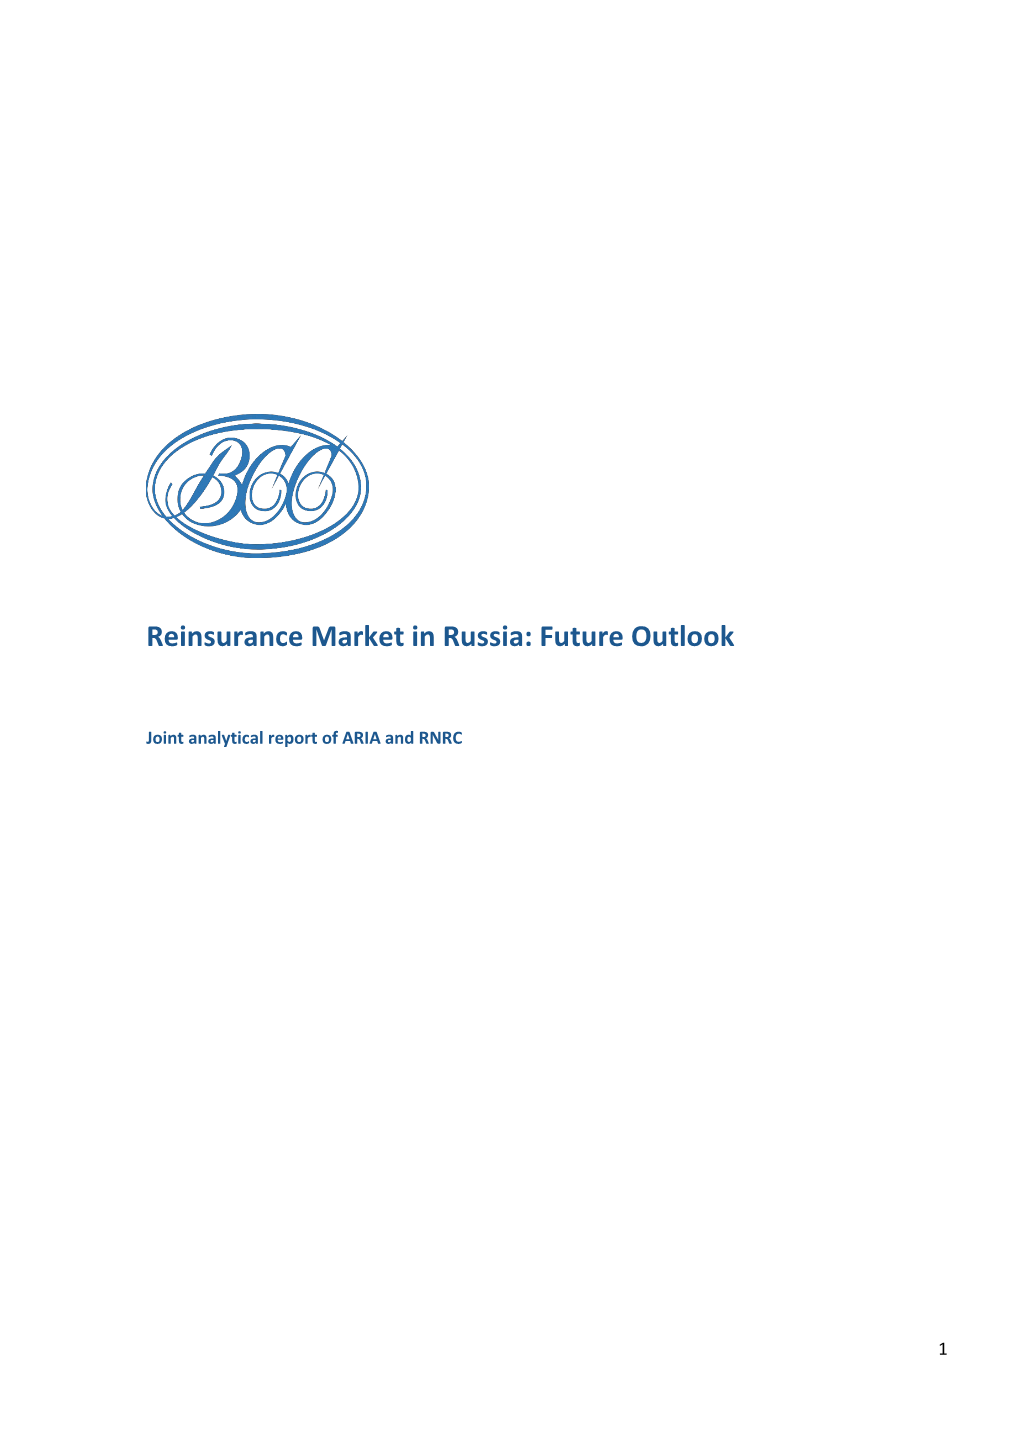 Reinsurance Market in Russia: 2015 Future Outlook